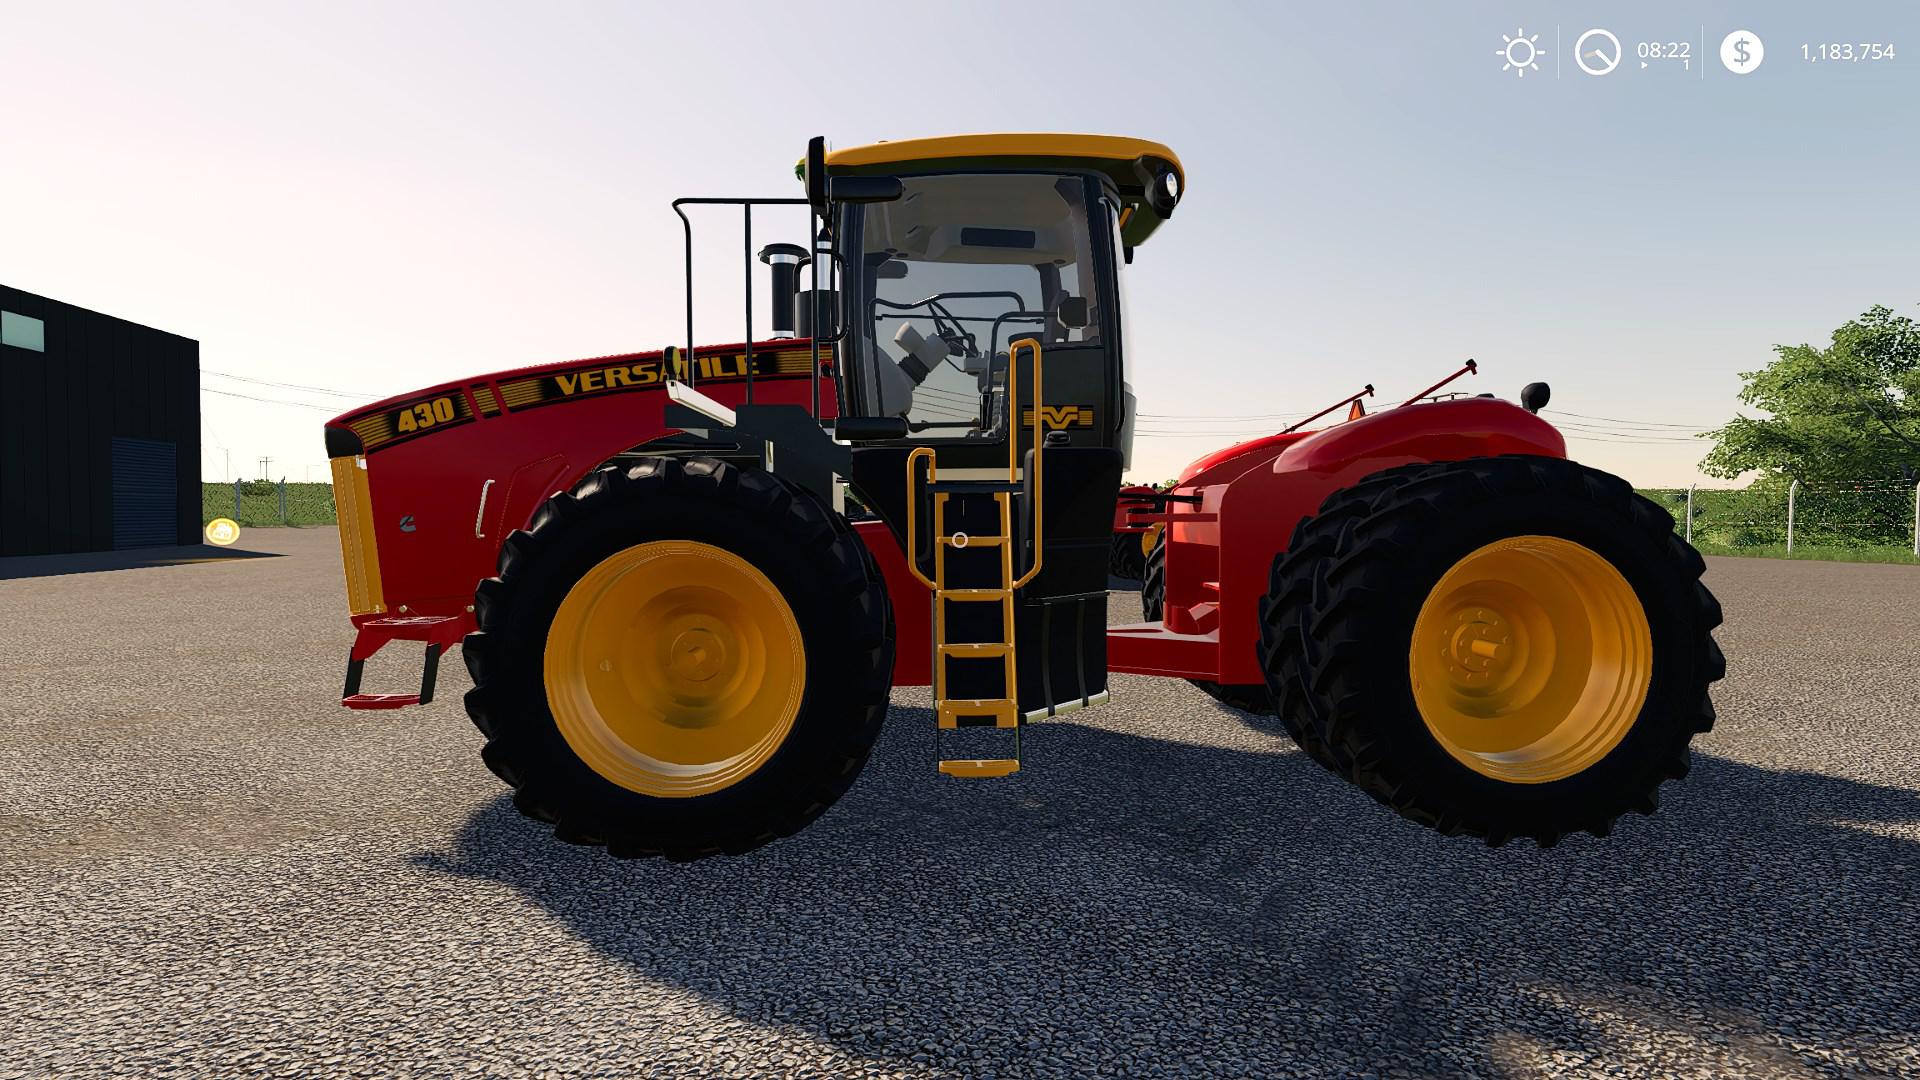 Farming simulator 19 трактора. Fs19 versatile. ФС 19 versatile 2375. Трактор versatile 4wd. Versatile 535 ФС 19.